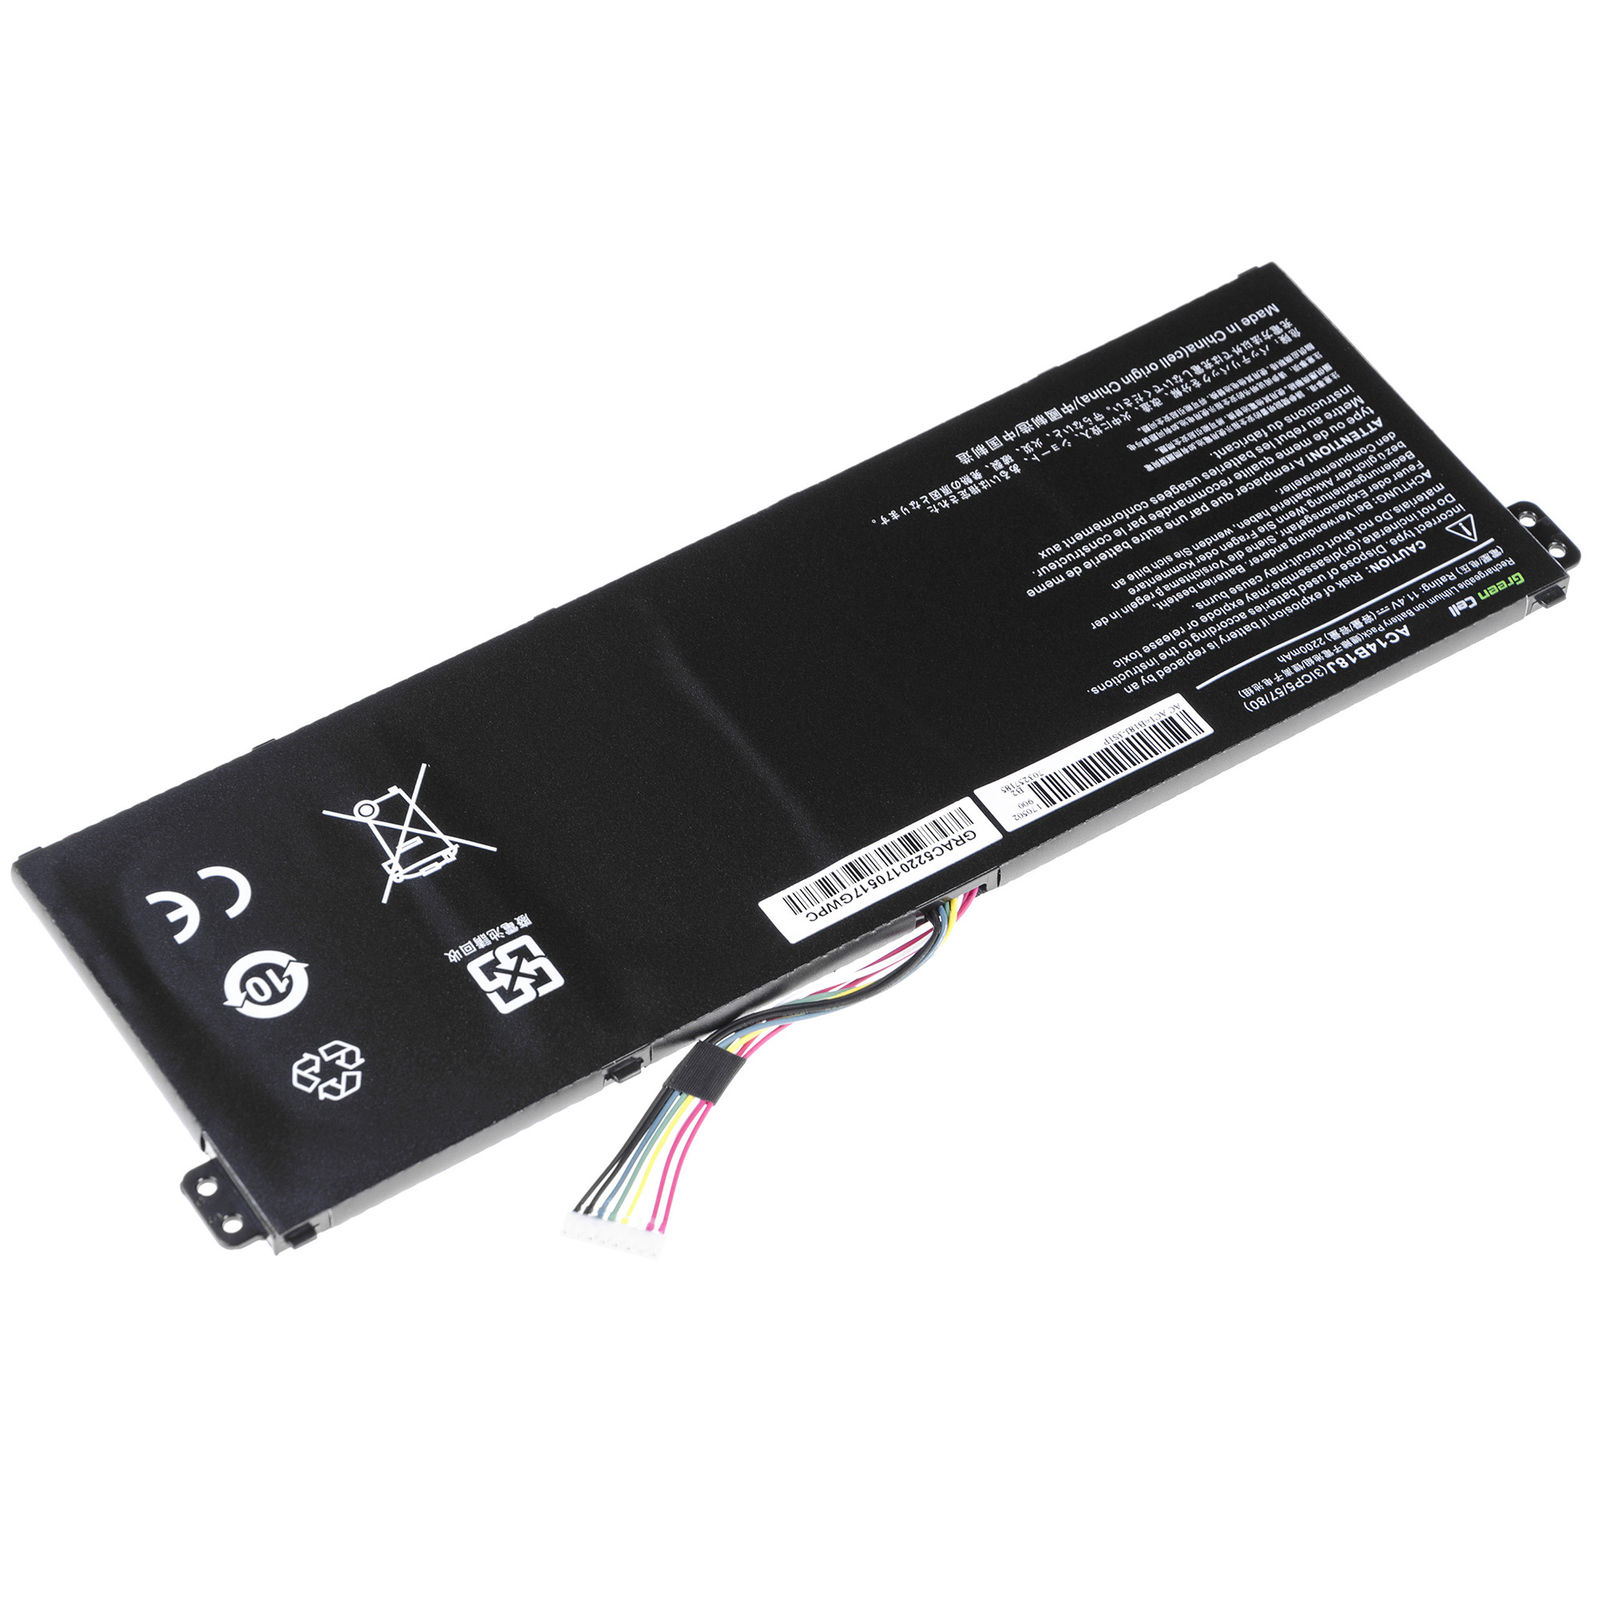 Acer Extensa 2519-P560 2200mAh compatible battery